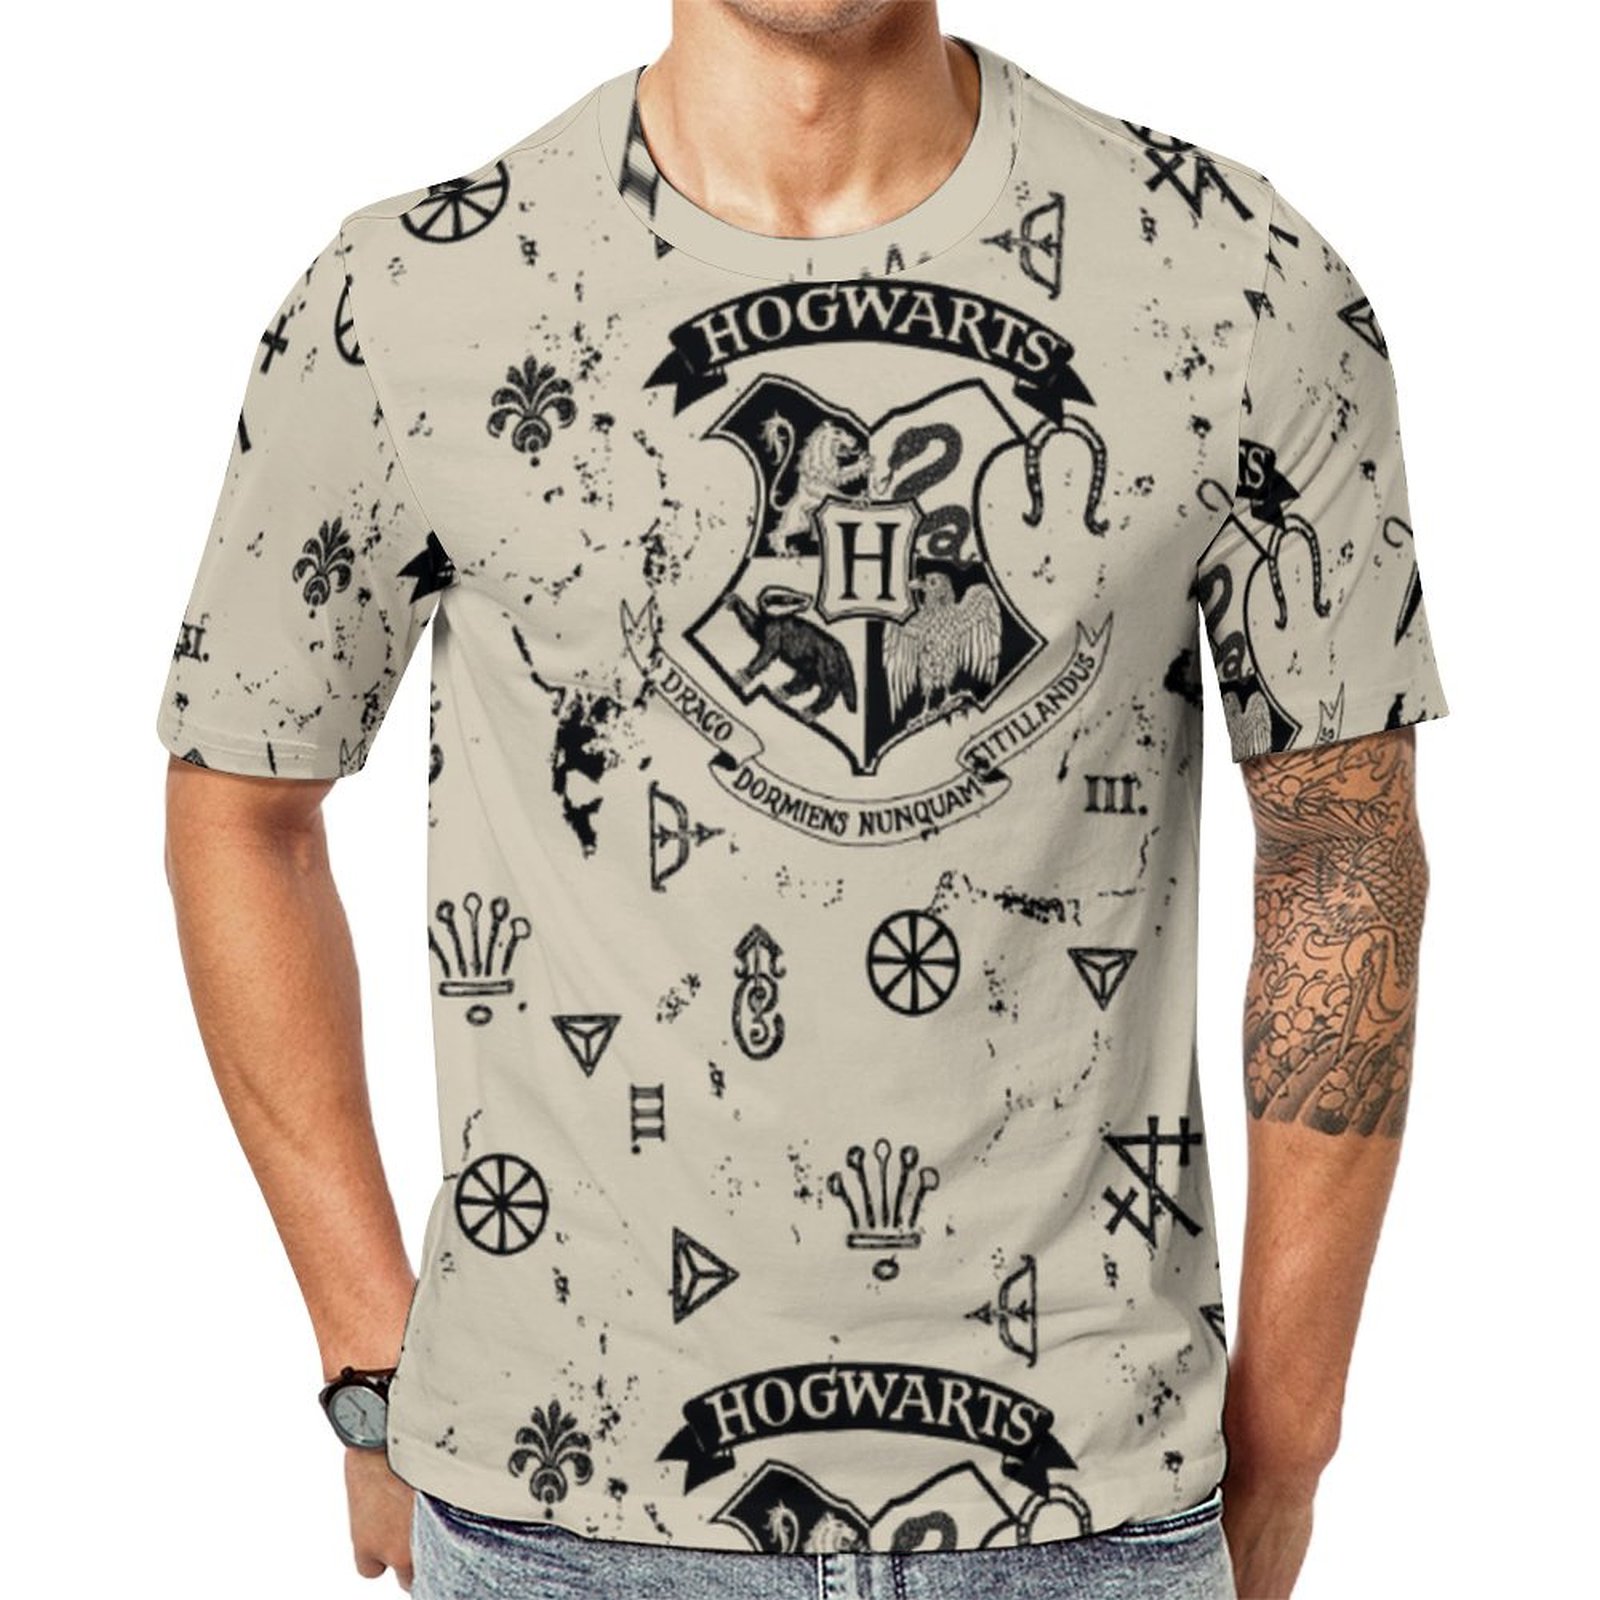 Hogwarts Beige Short Sleeve Print Unisex Tshirt Summer Casual Tees for Men and Women Coolcoshirts